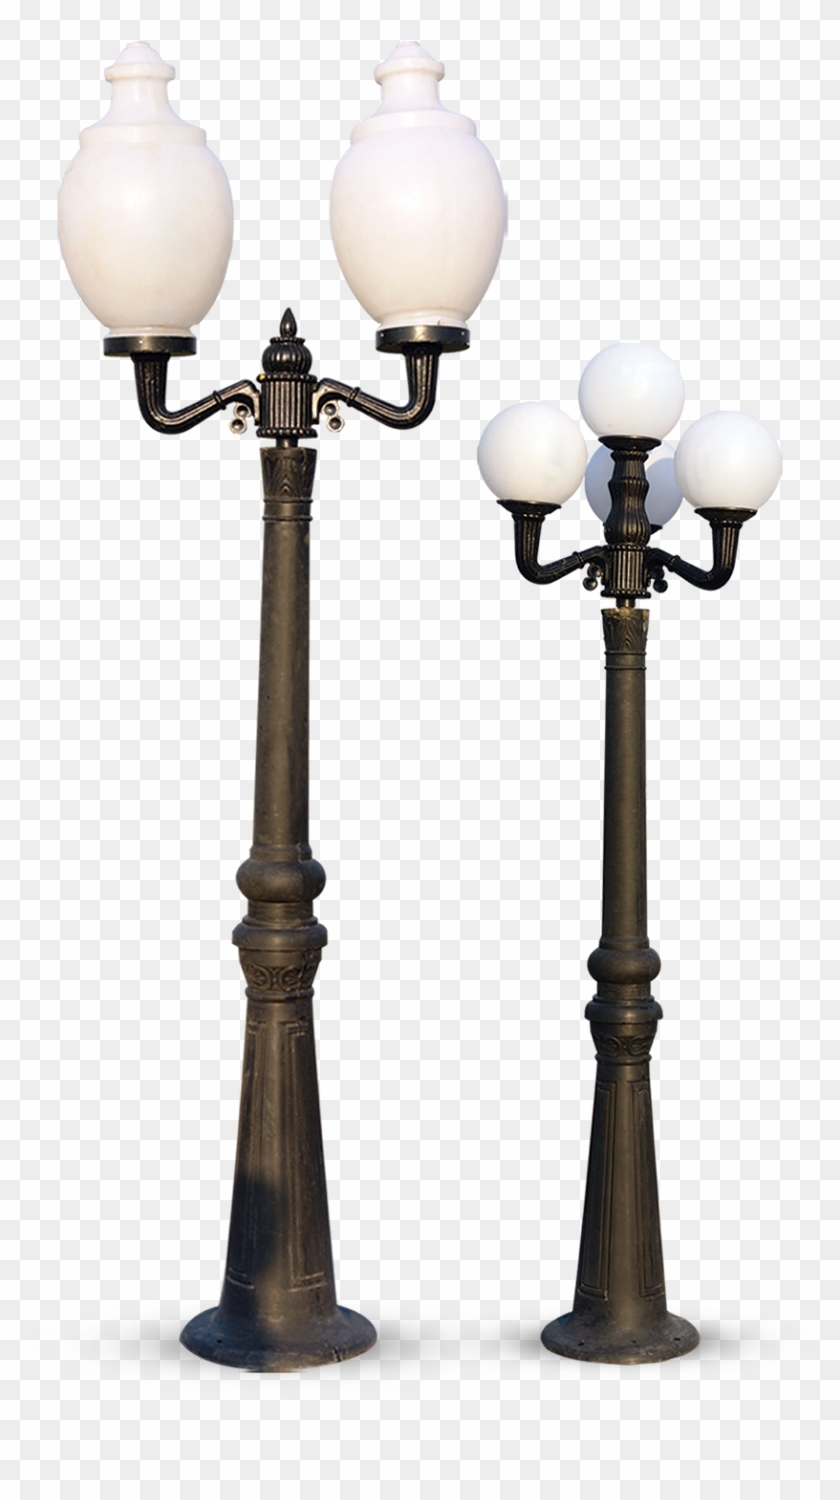 Dura Polylights Lamp Poles With Street Light Poles - Street Light #529207